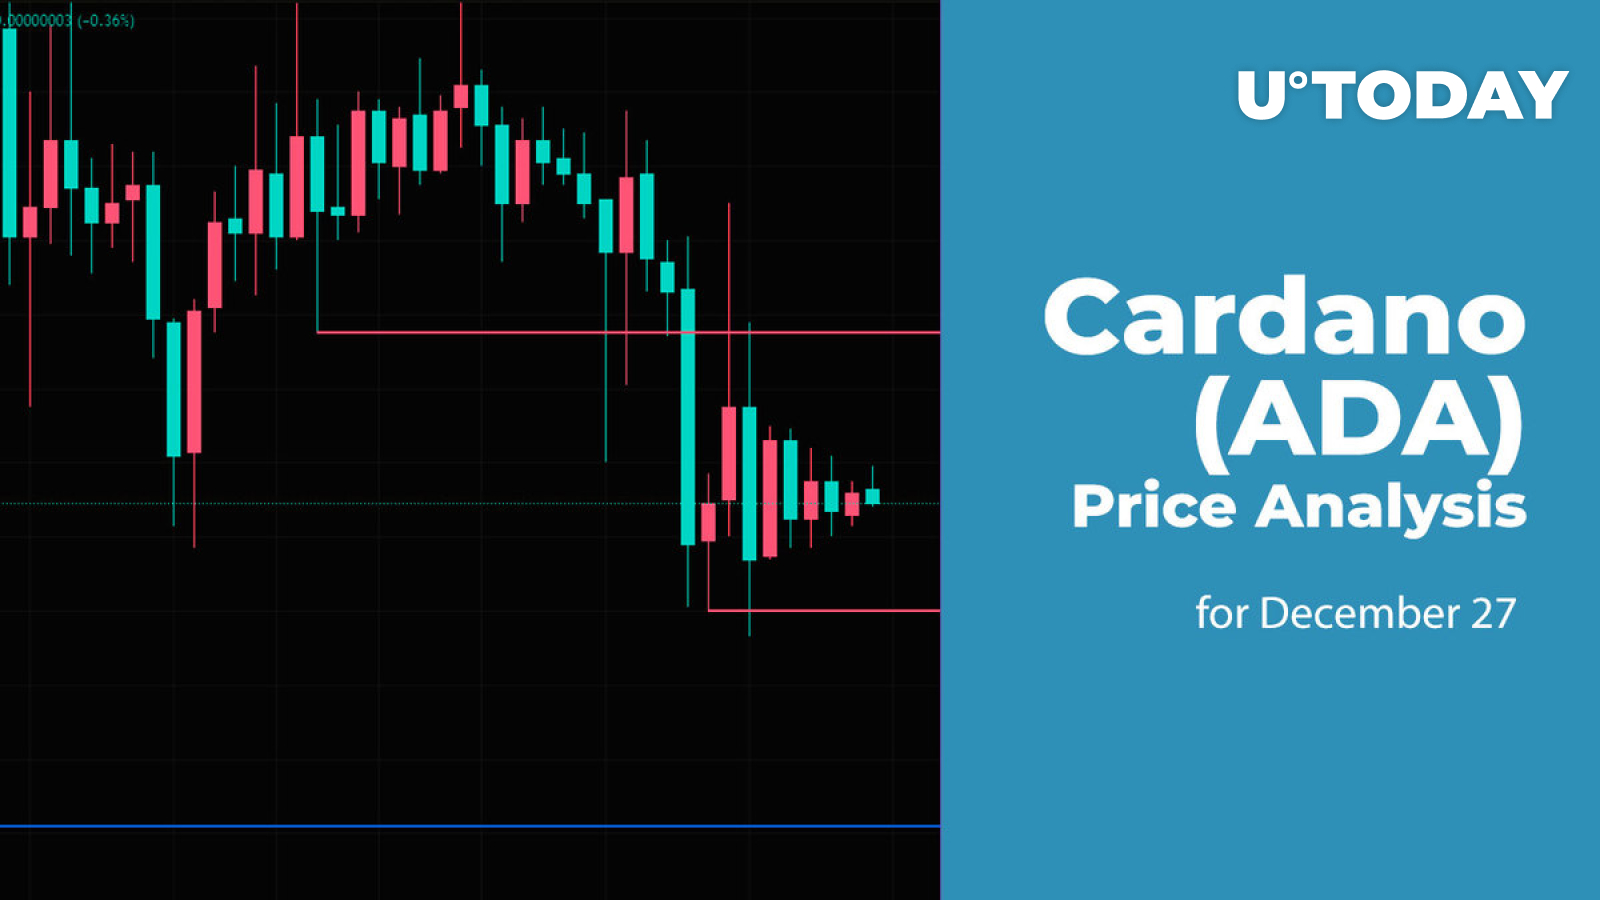 Cardano (ADA) Price Analysis for December 27